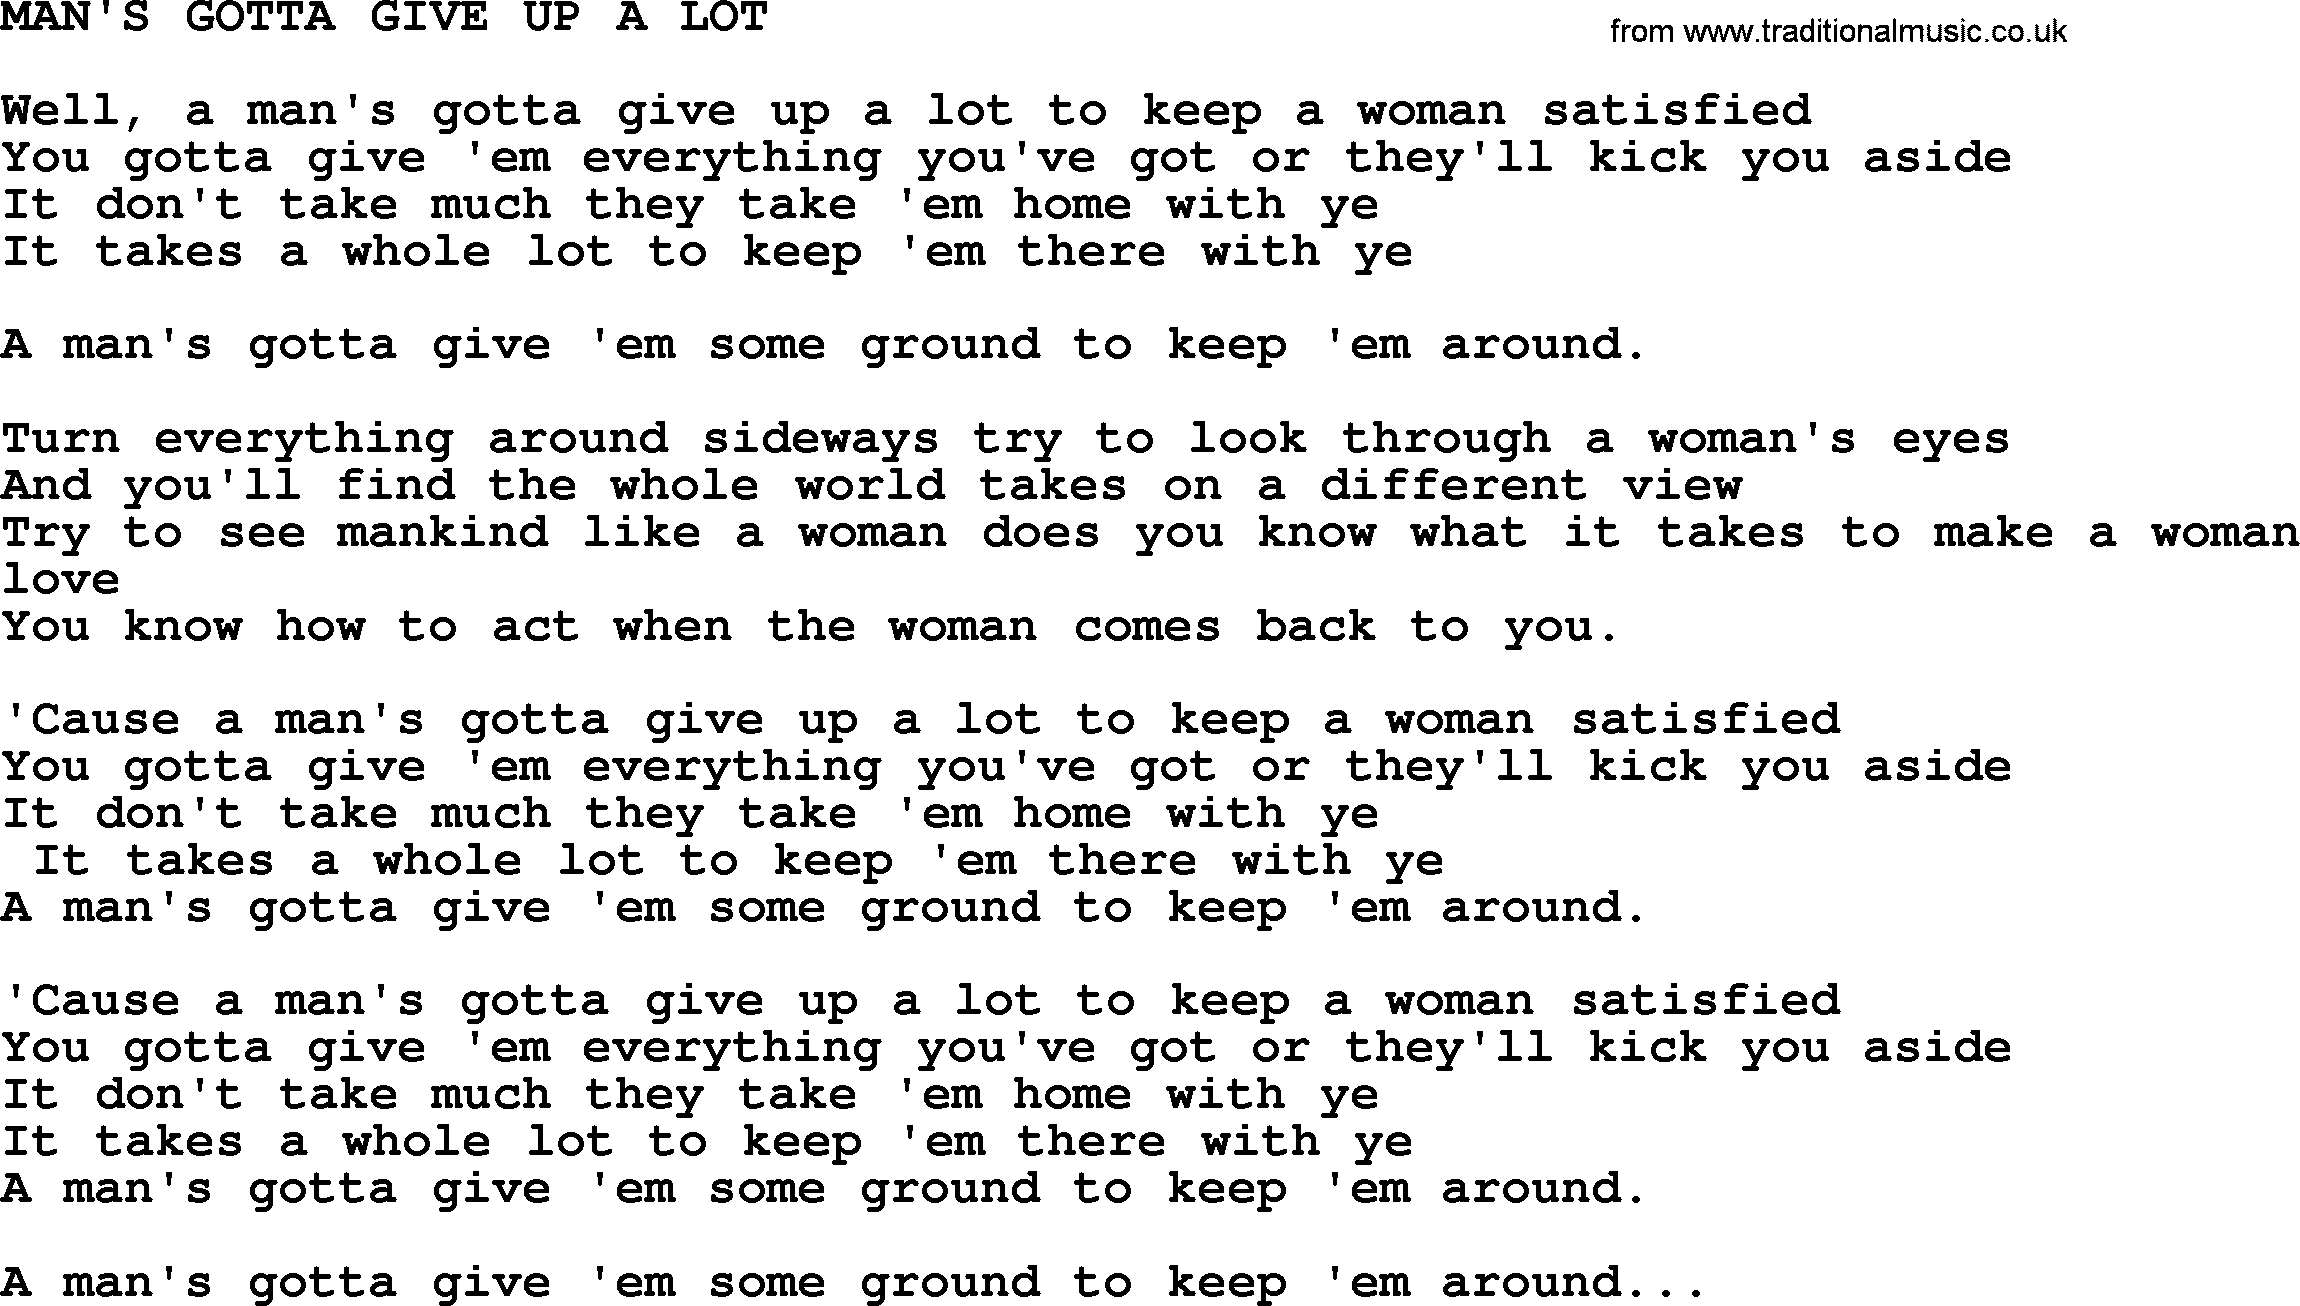 Merle Haggard song: Man's Gotta Give Up A Lot, lyrics.